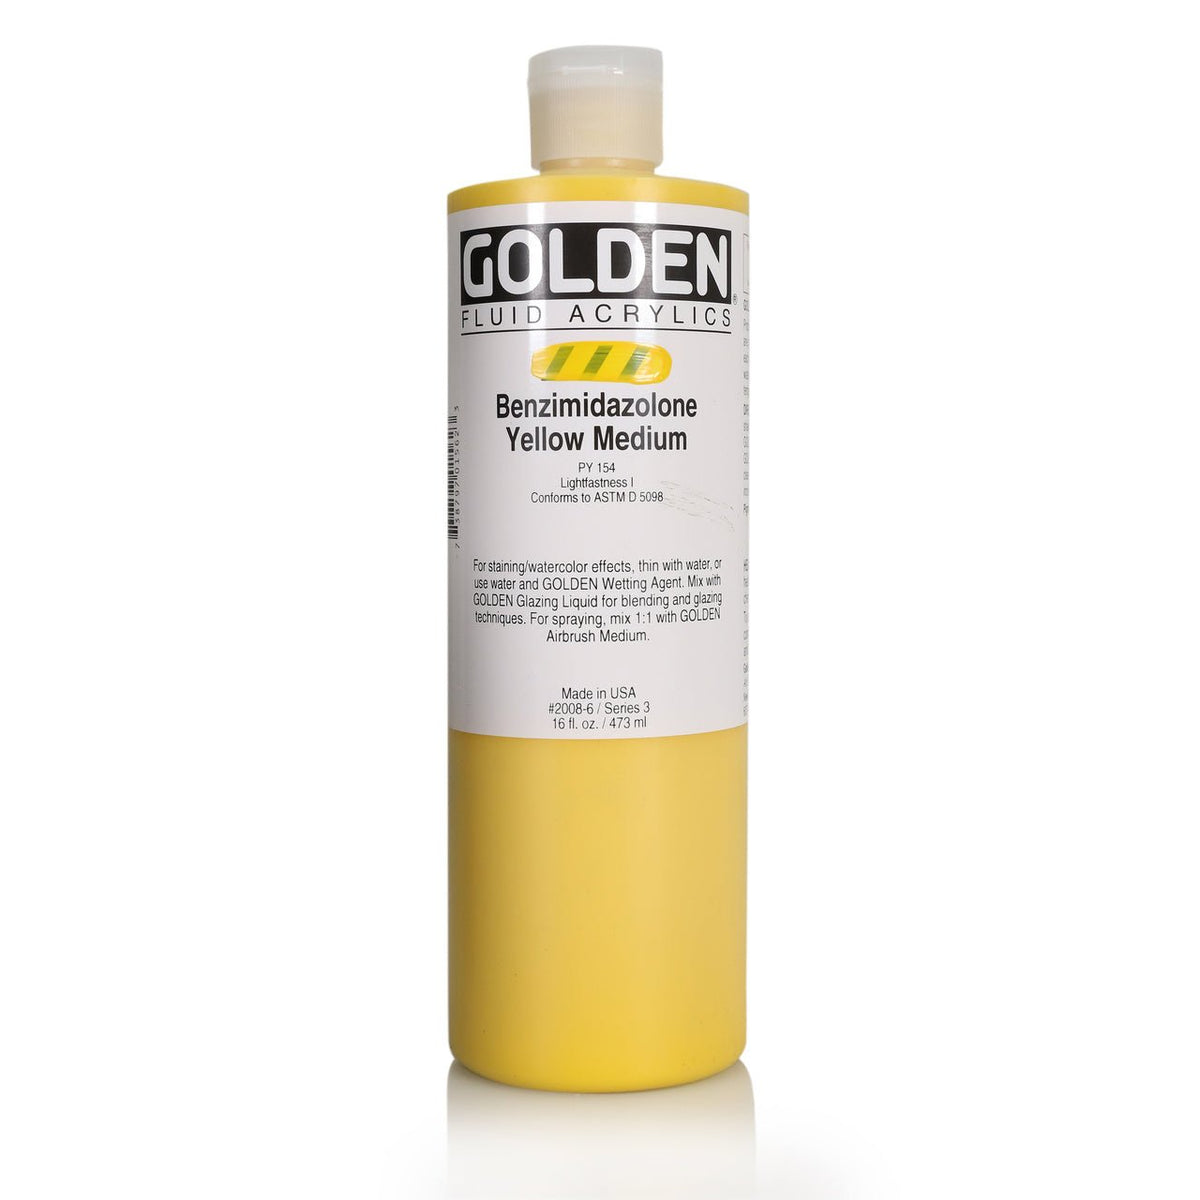 Golden Fluid Acrylic Benzimidazolone Yellow Medium 16 oz - merriartist.com